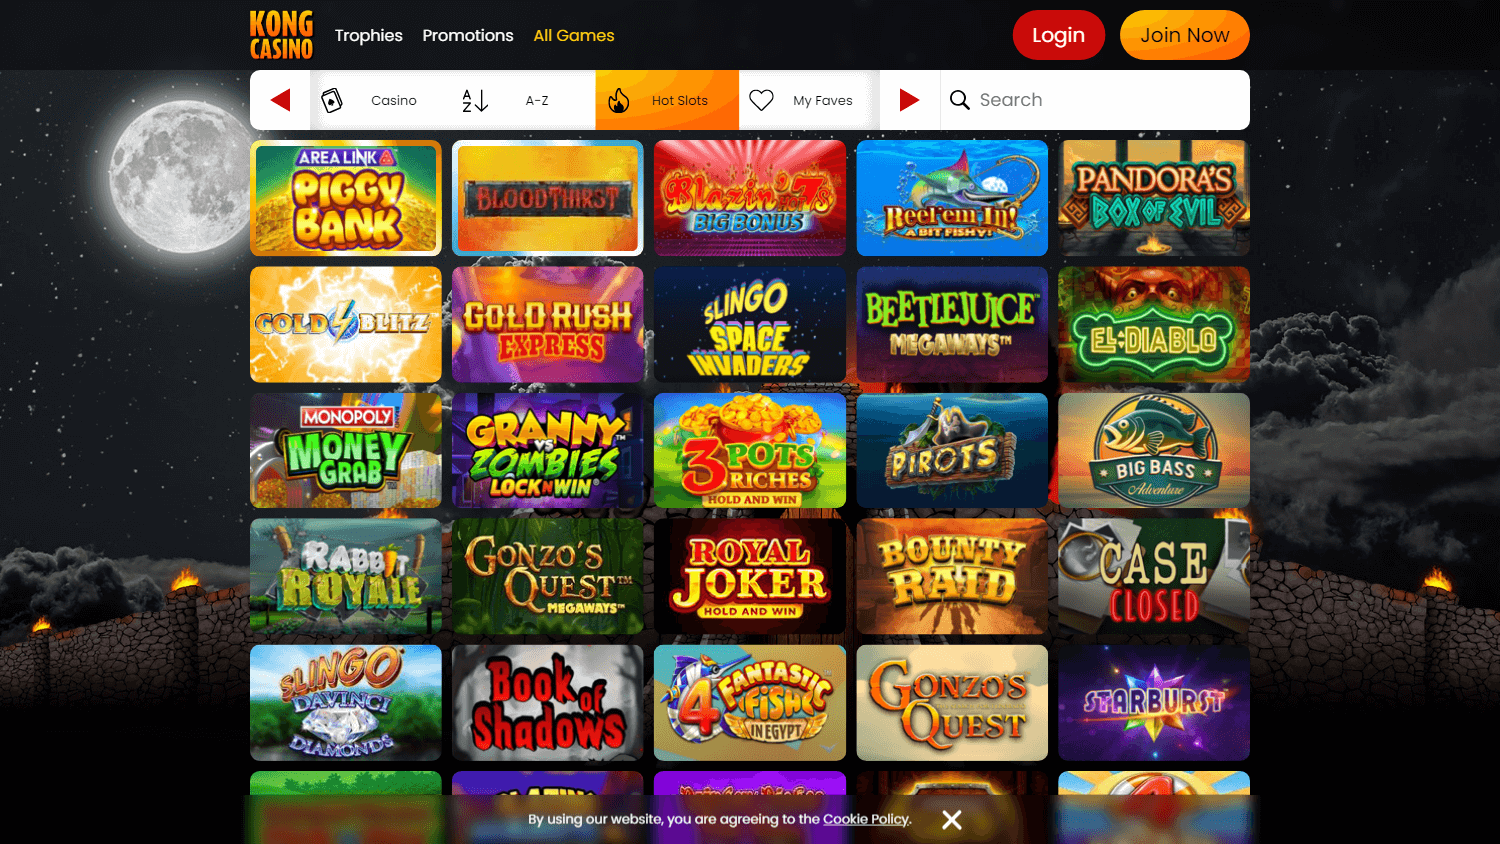 kong_casino_game_gallery_desktop